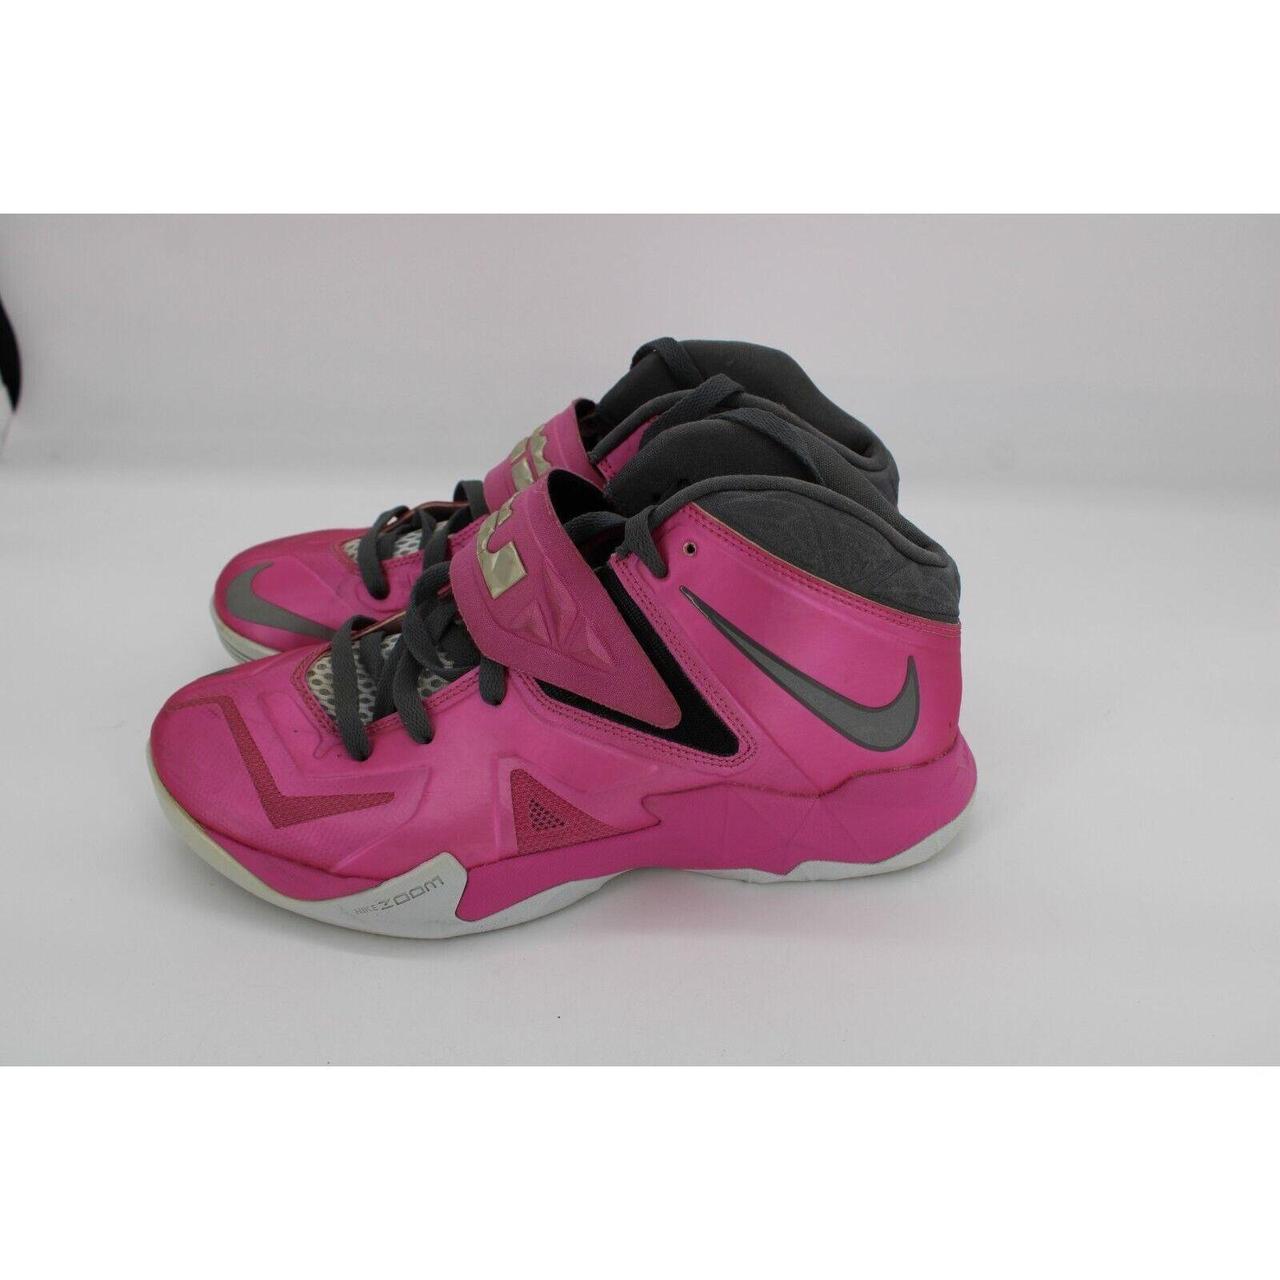 Nike LeBron Soldier 9 'Think Pink